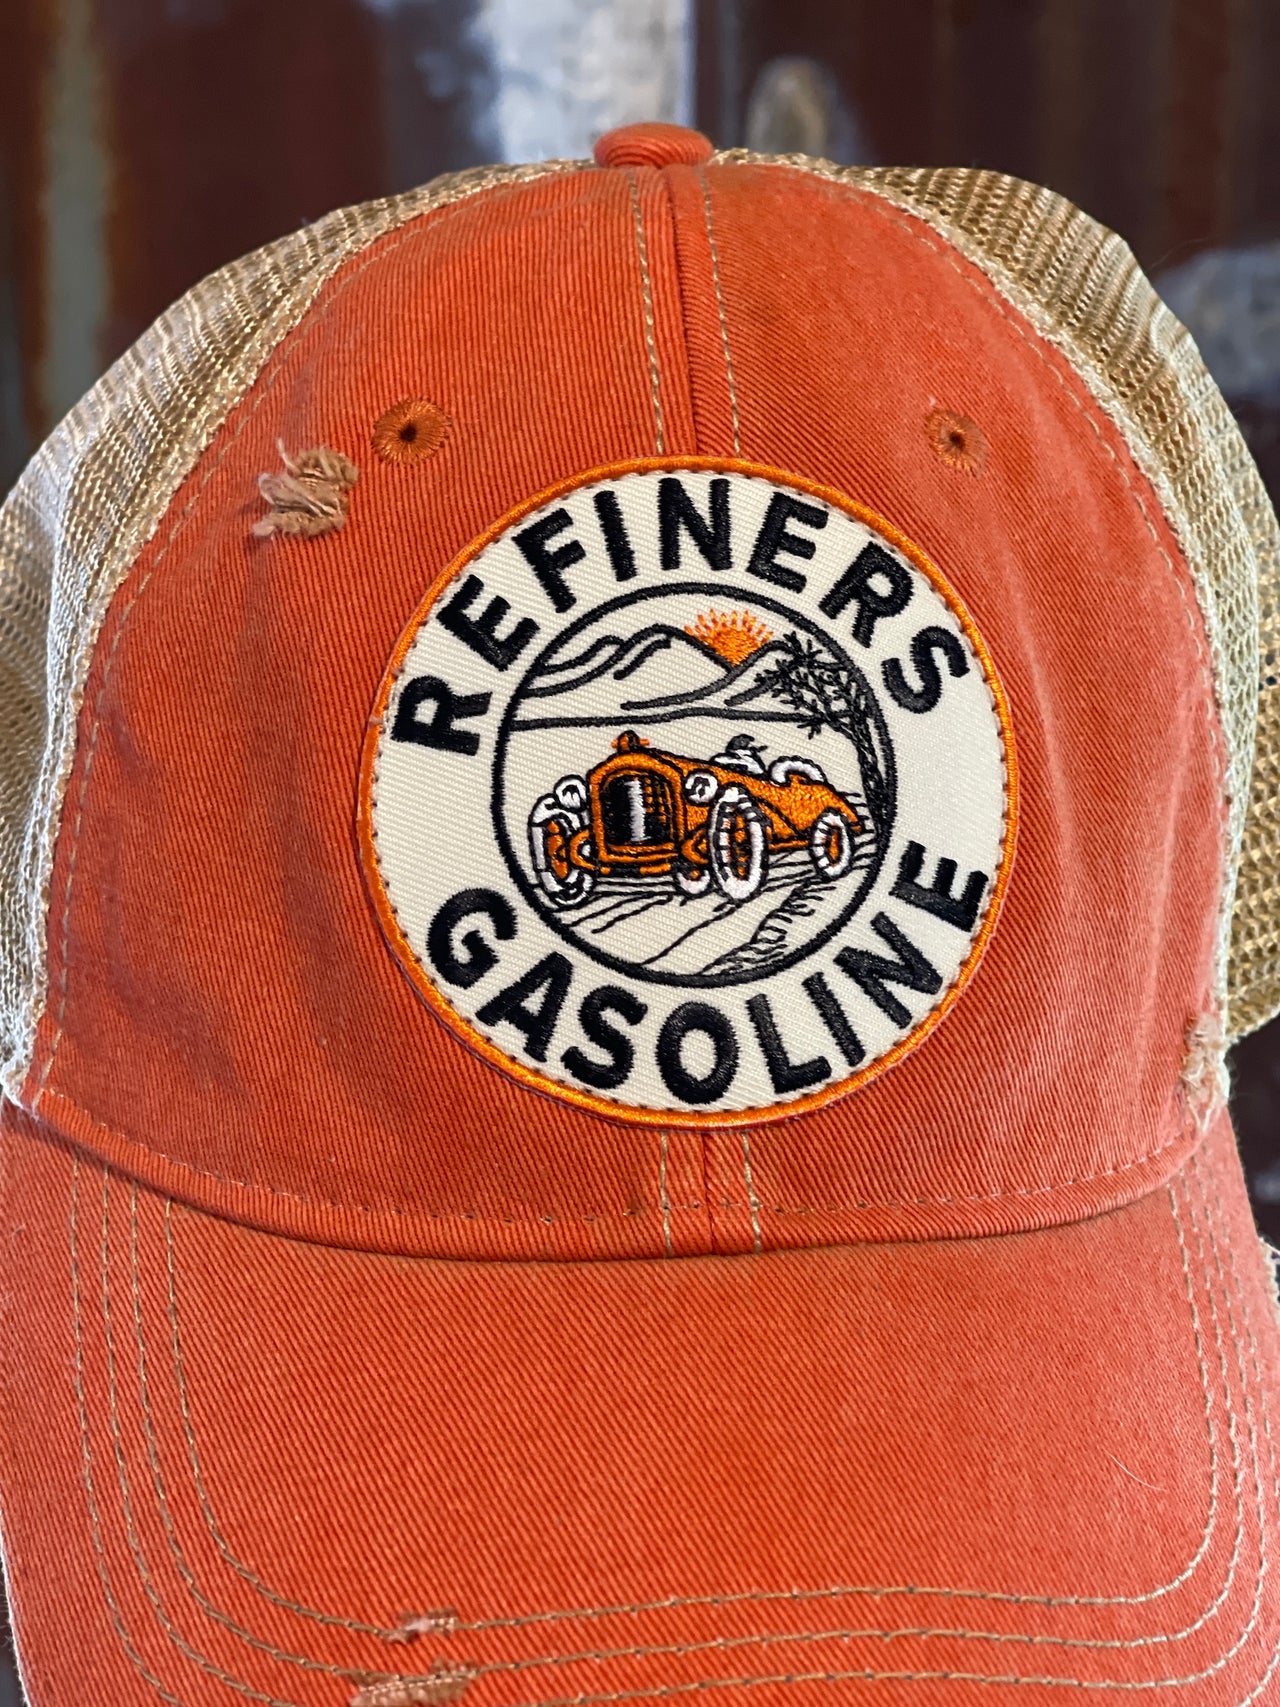 Refiners Gasoline Patch Hat- Distressed Orange snapback